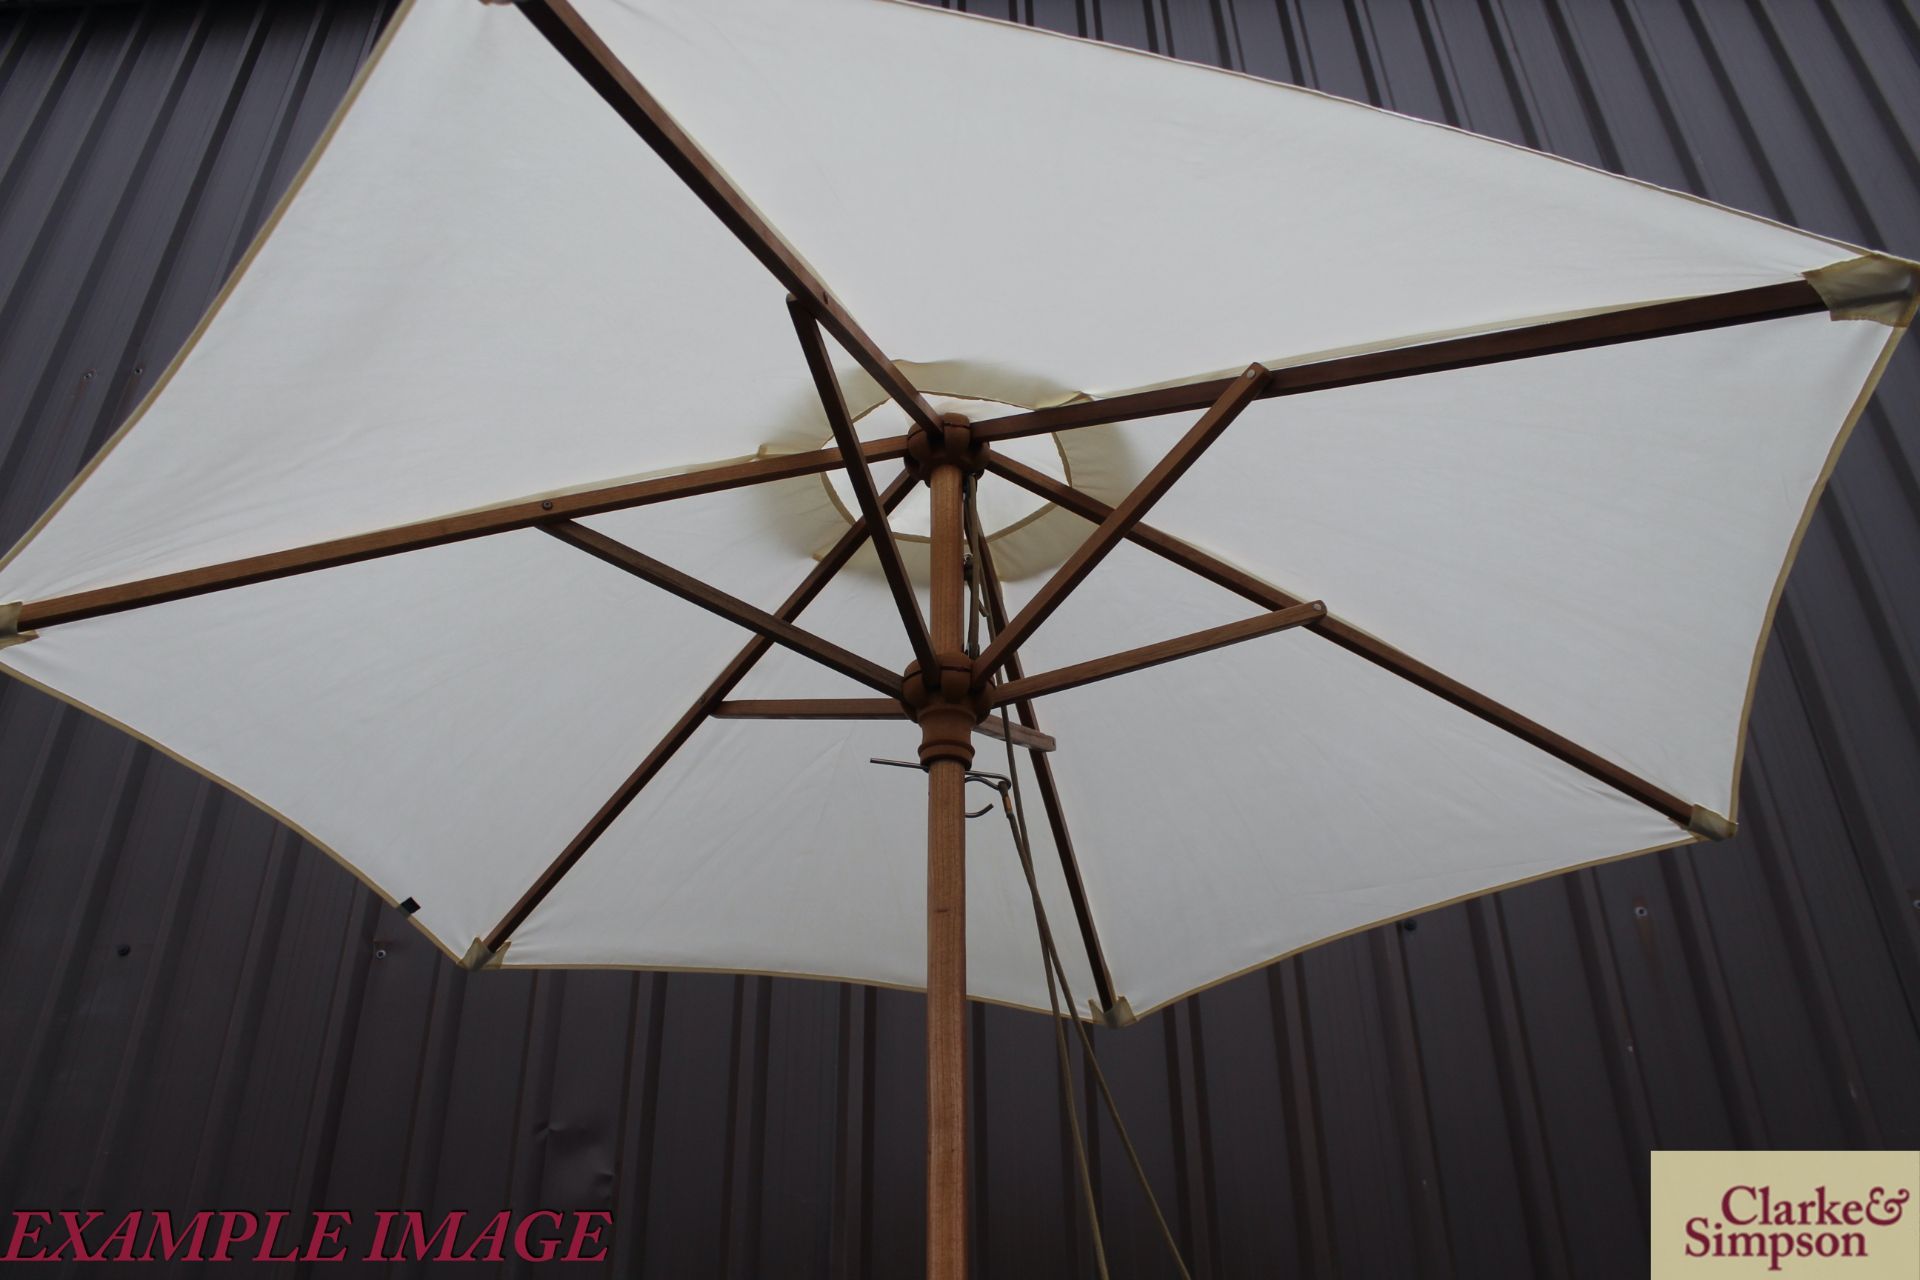 5x Sturdi 2m natural parasols. No bases. - Image 3 of 4